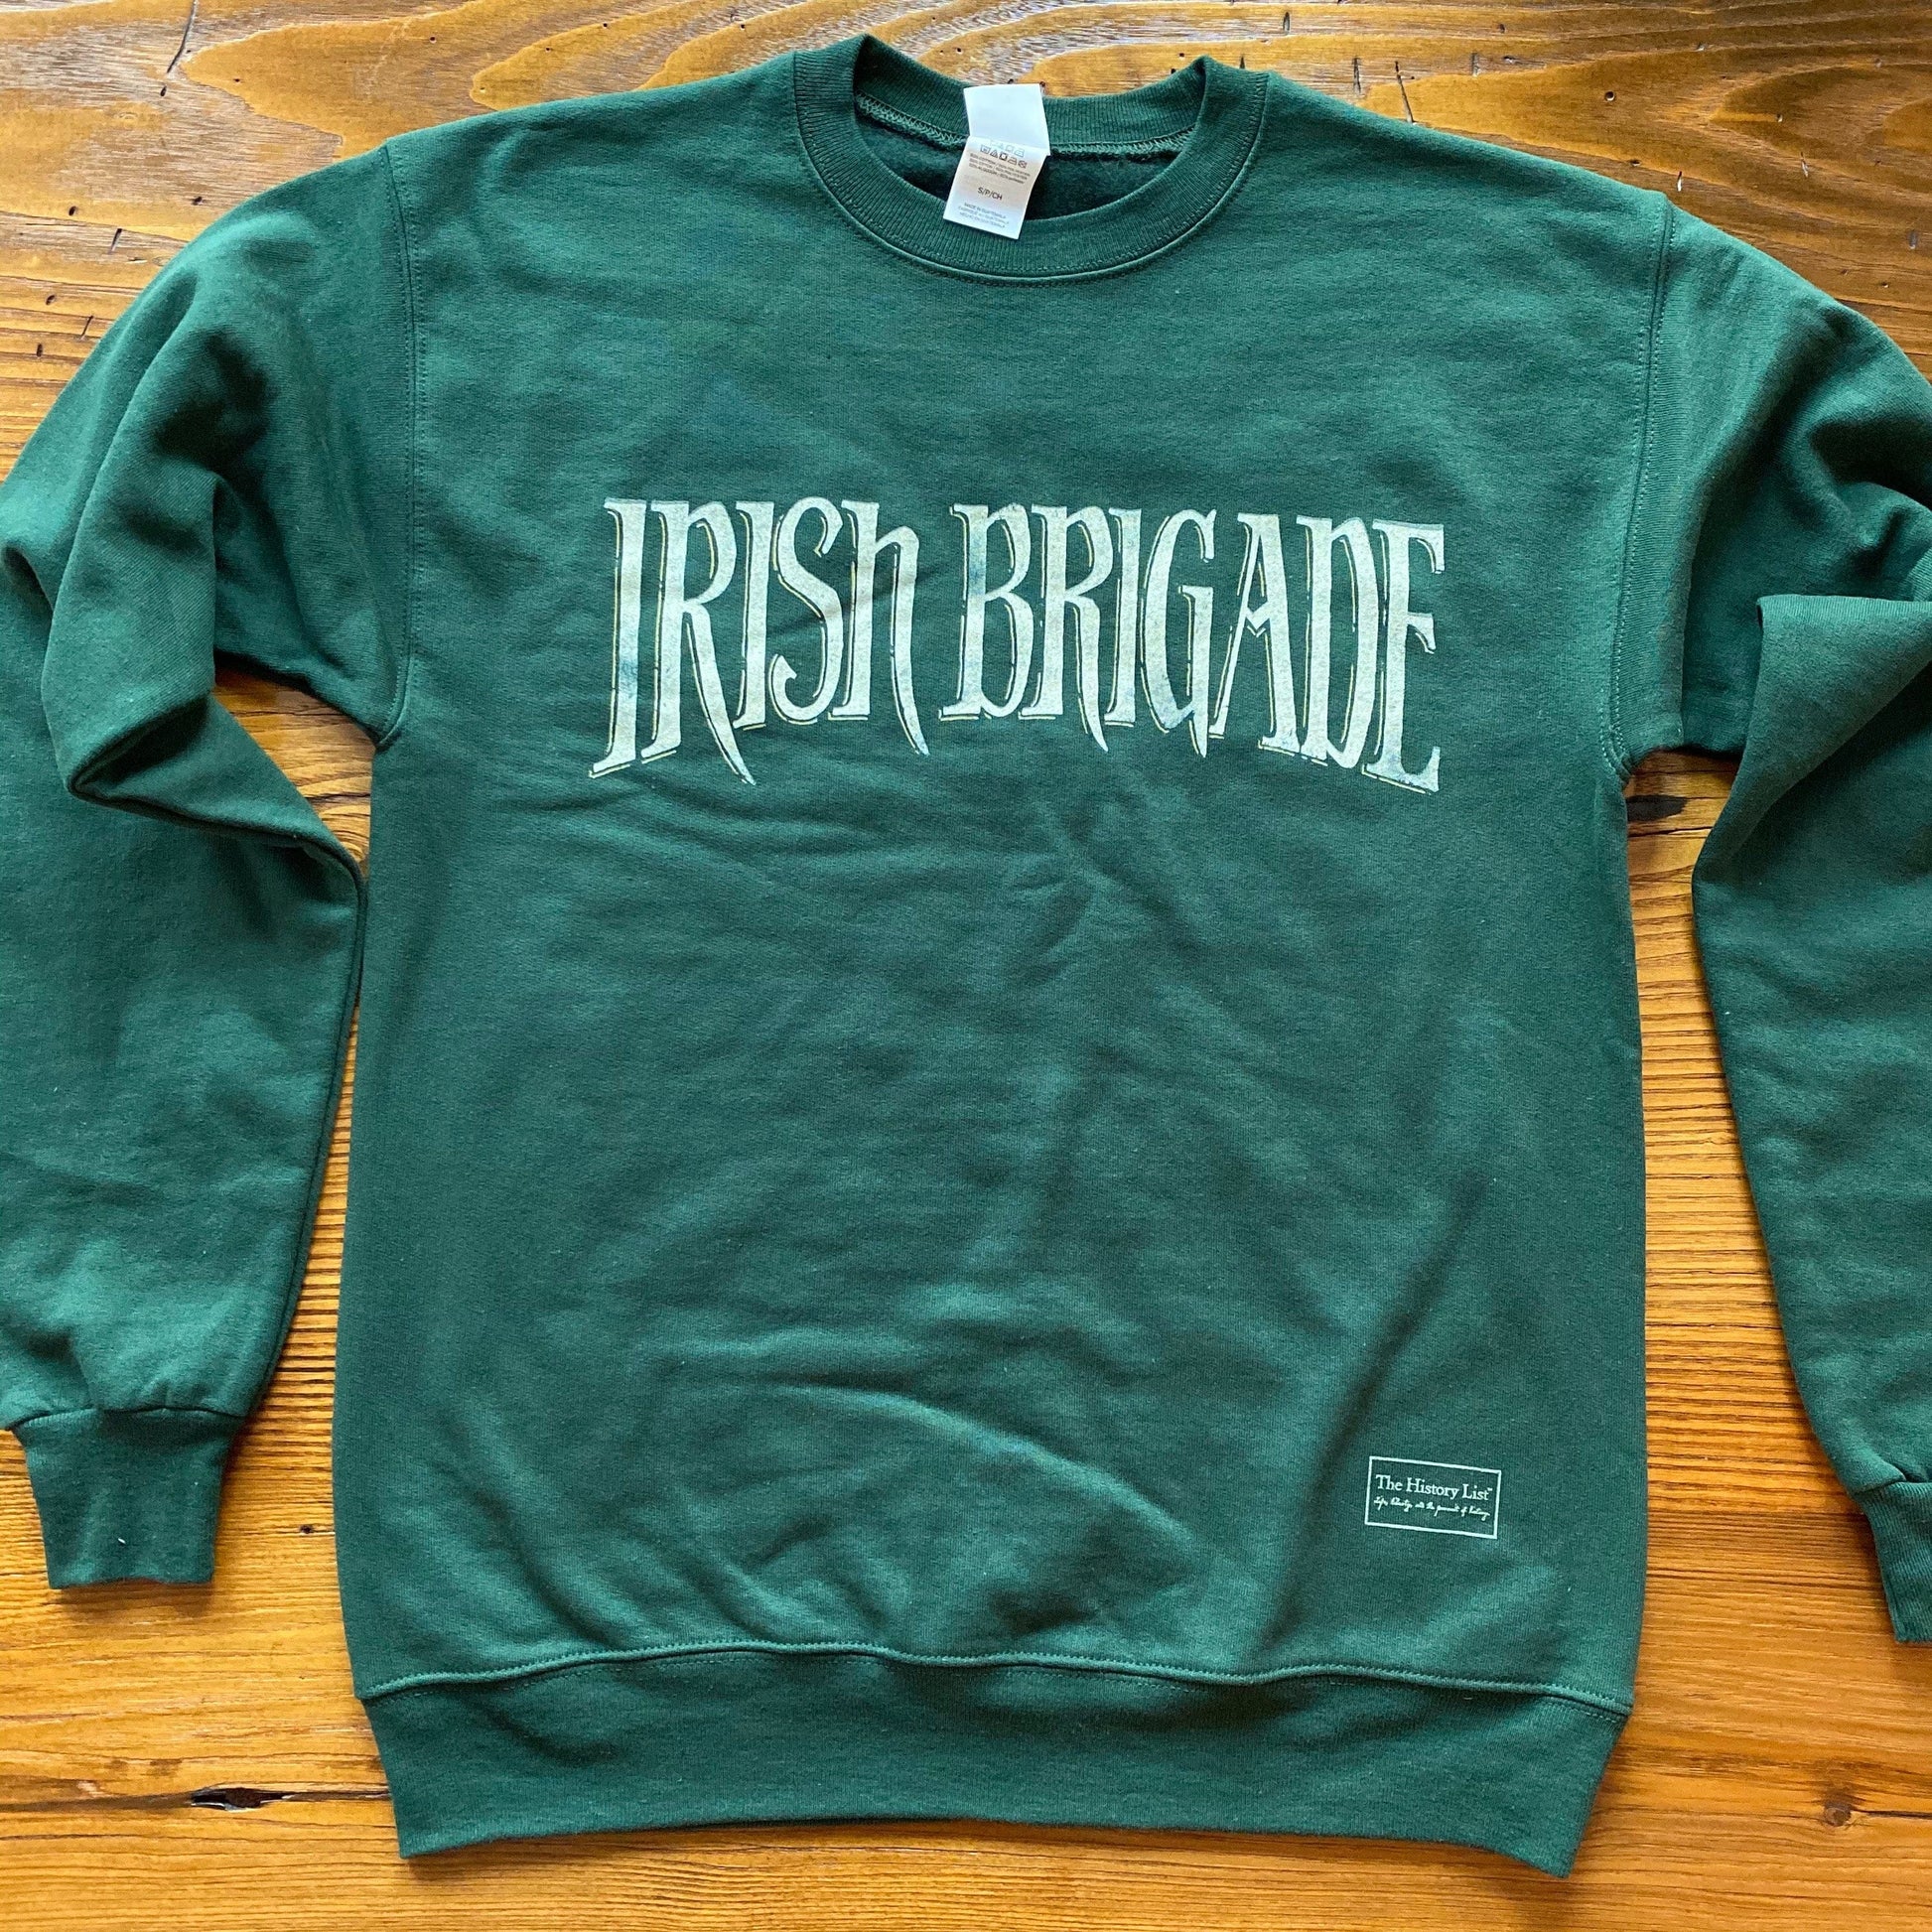 Front of The Civil War "Irish Brigade" Crewneck sweatshirt from the History List Store